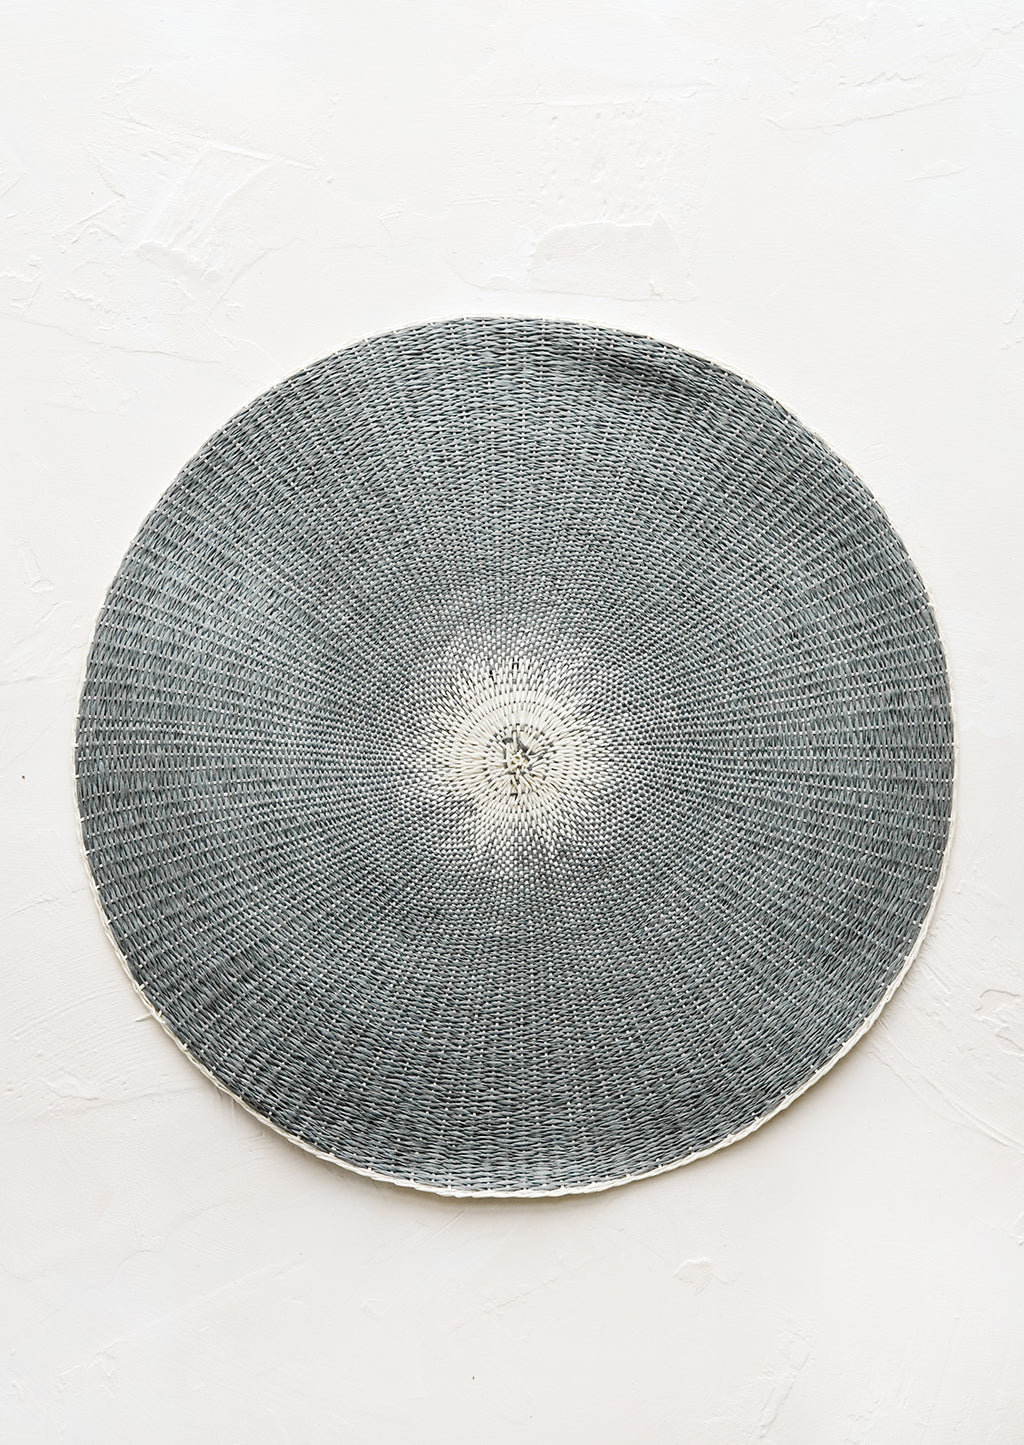 Dark Grey: A round straw placemat in dark grey with white spot at center.